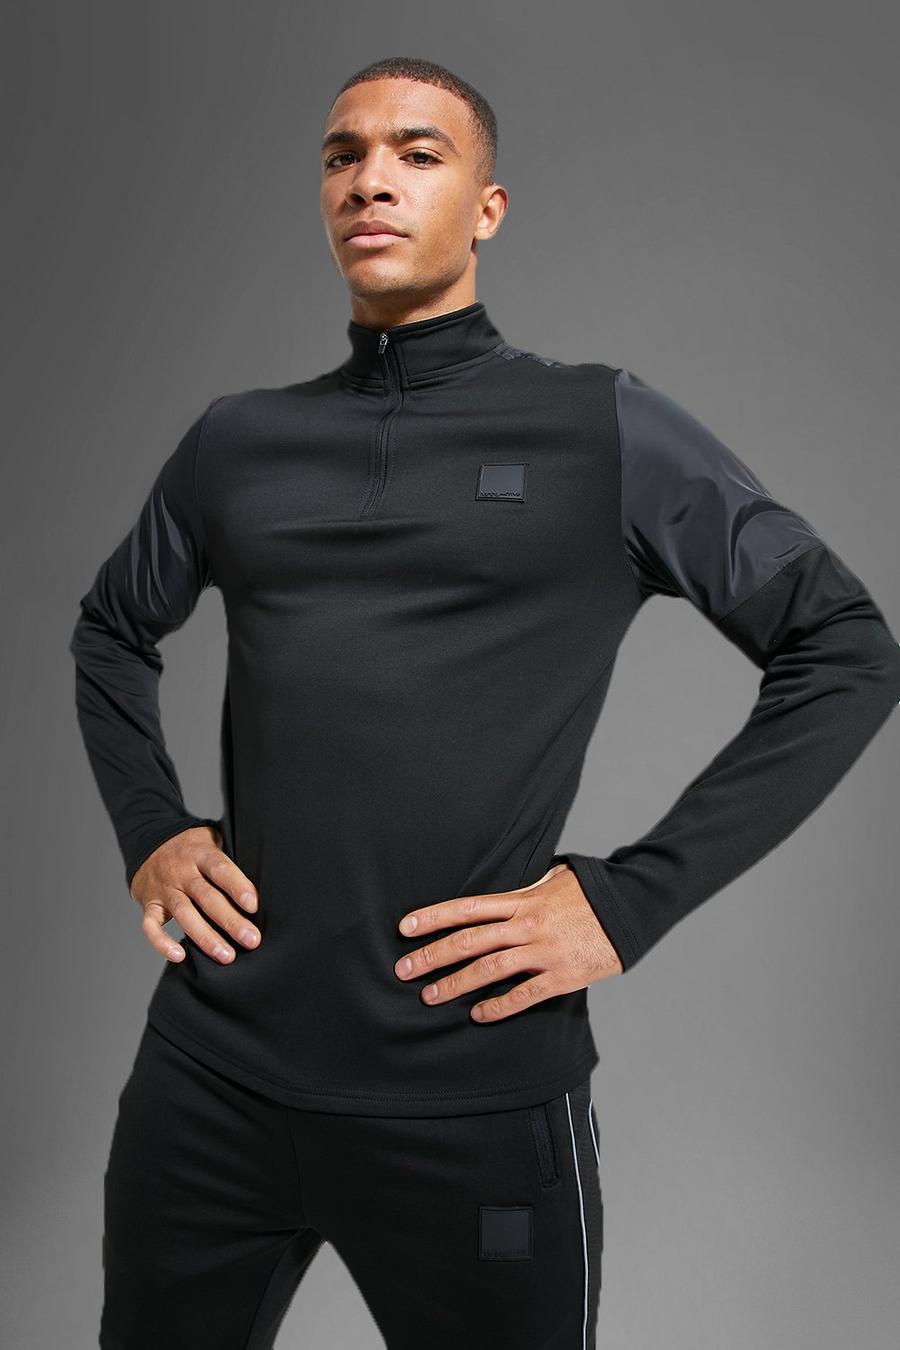 Man Active Gym Performance Trainingsanzug mit Reißverschluss, Black